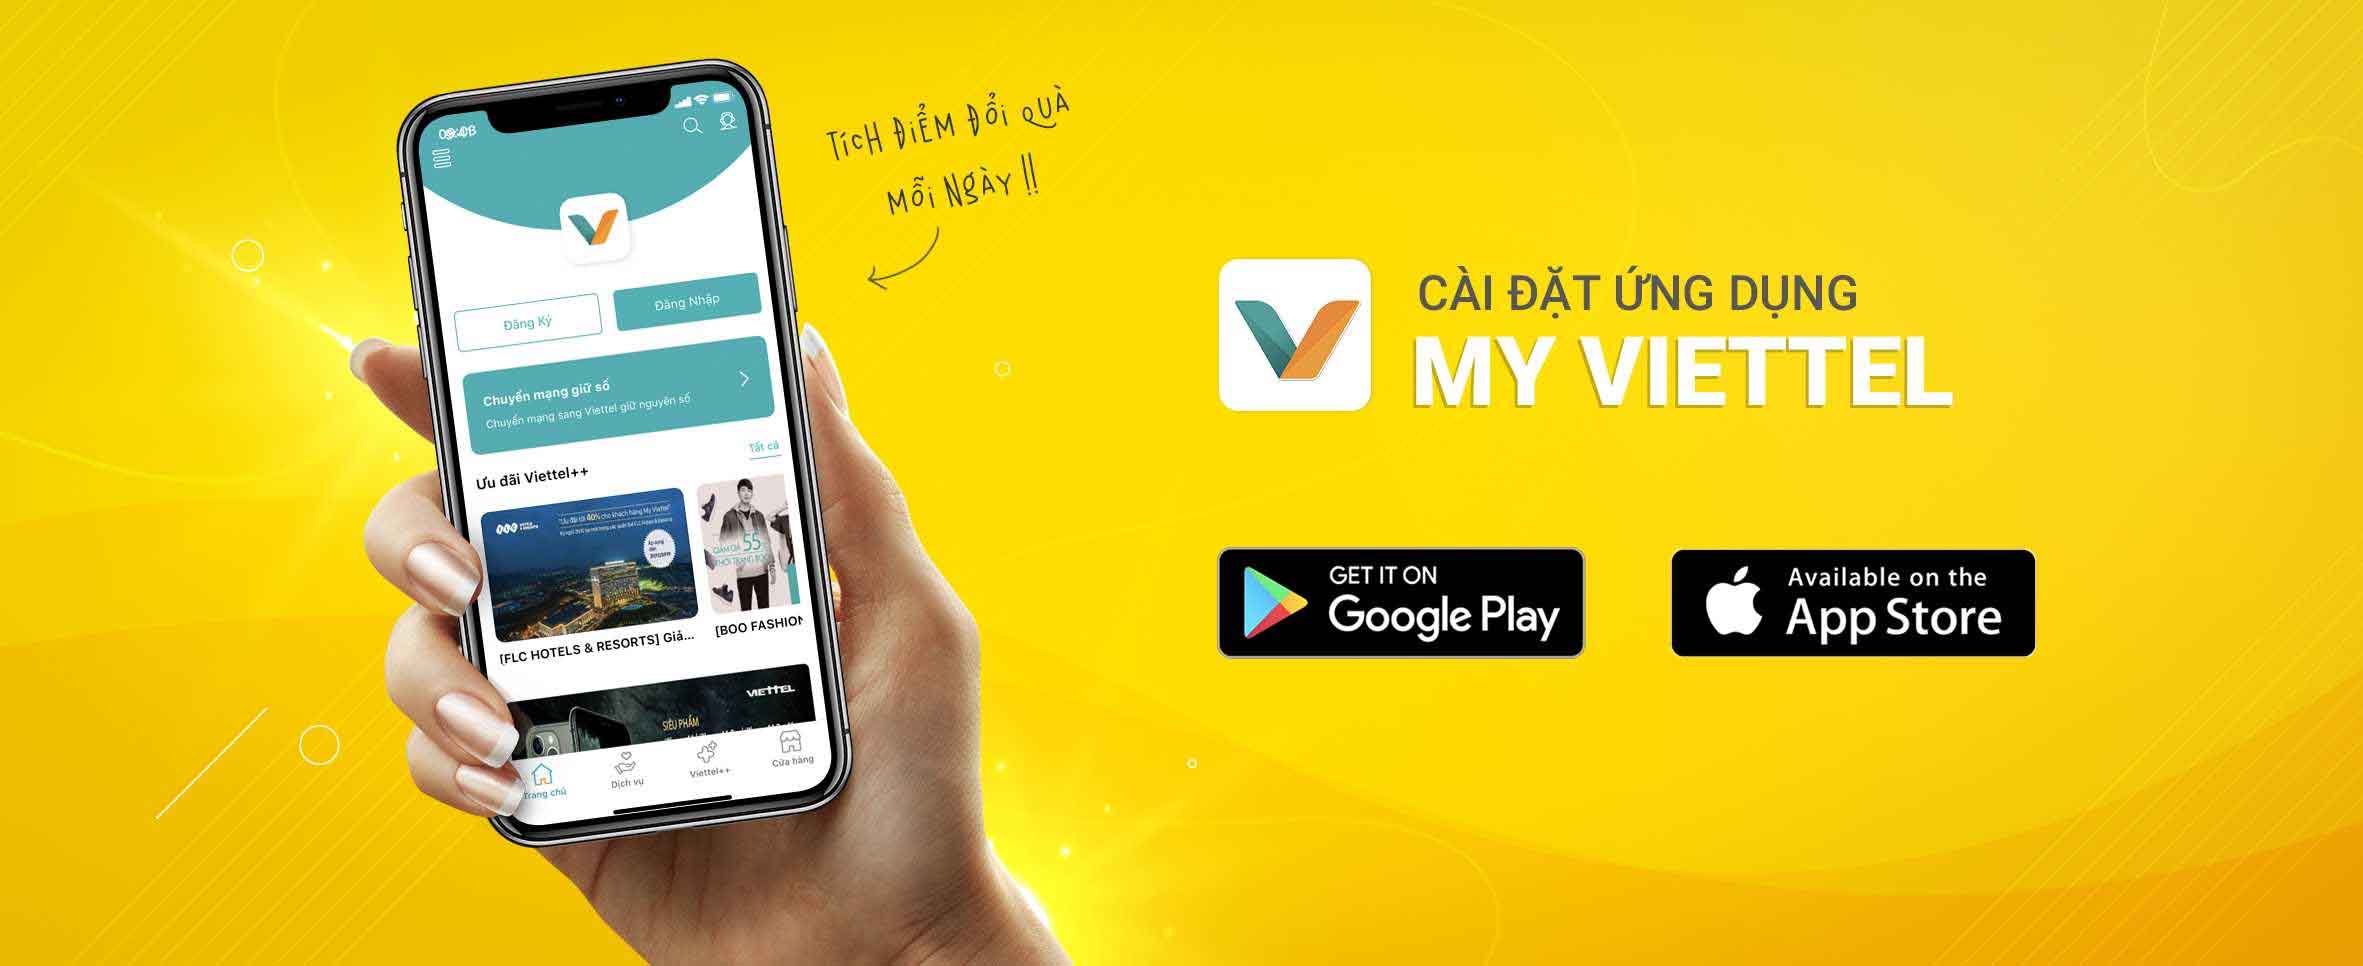 Cách kiểm tra tài khoản Viettel, Mobifone, Vinaphone, Vietnamobile - Thegioididong.com